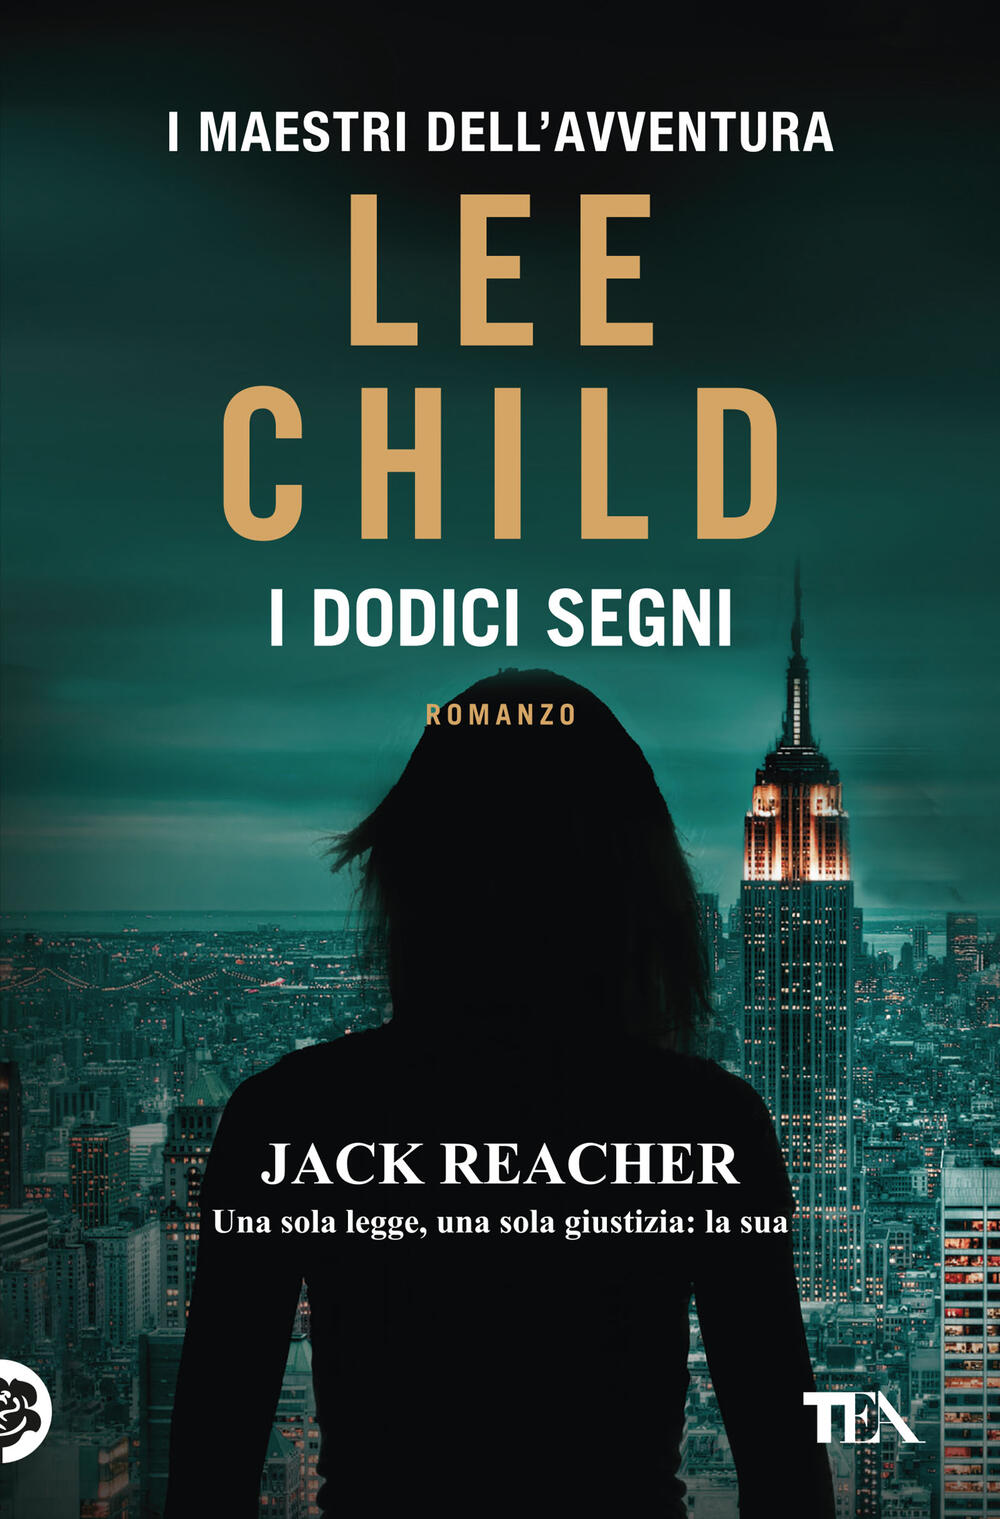 Lee Child - Le avventure di Jack Reacher — TEA Libri